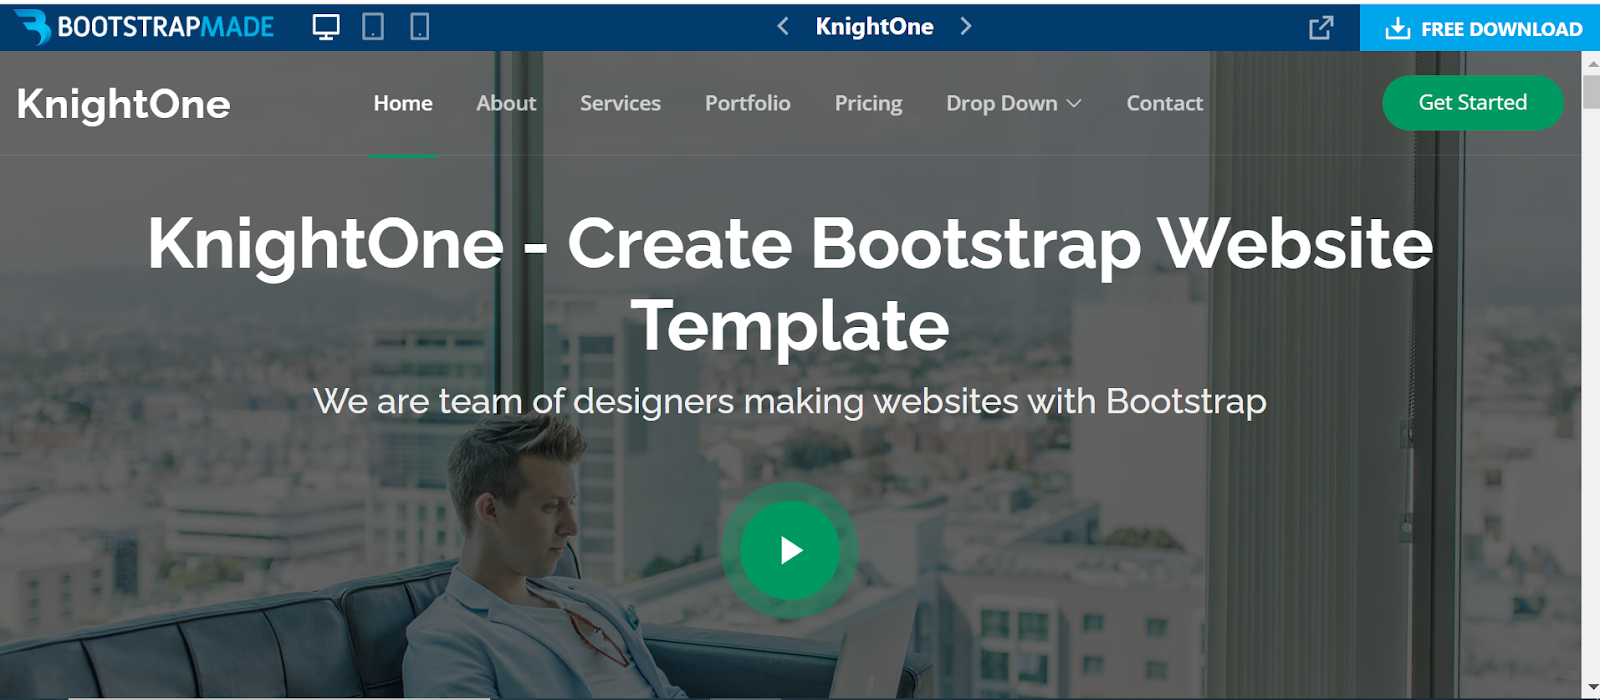 Bootstrap website templates, KnightOne